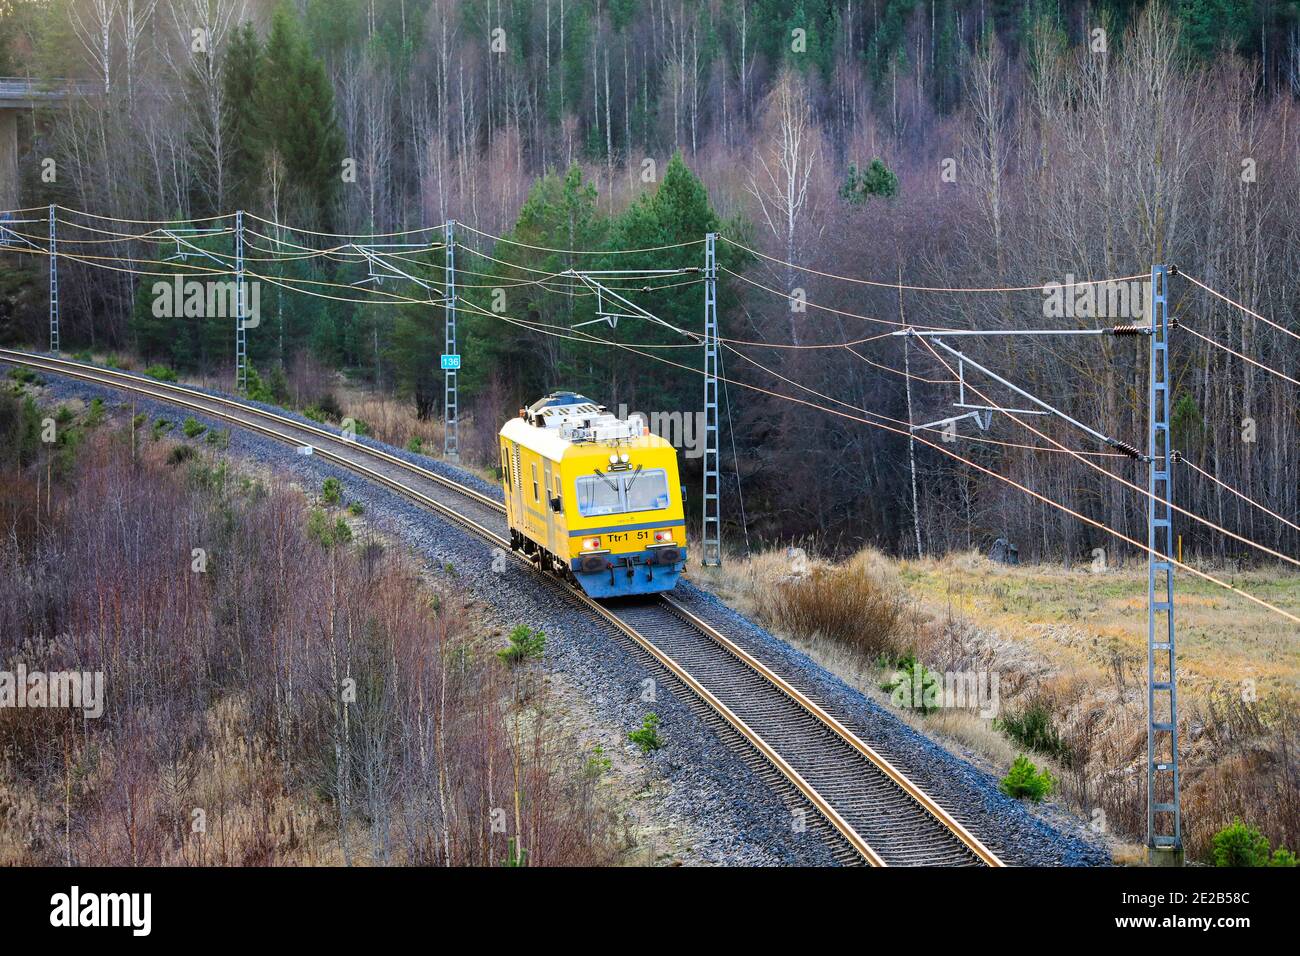 Finnish State Railways Ttr1 51 EMMA, Plasser & Theurer EM-120, track inspection vehicle at speed on Coastal Railway. Salo, Finland. November 27, 2020. Stock Photo